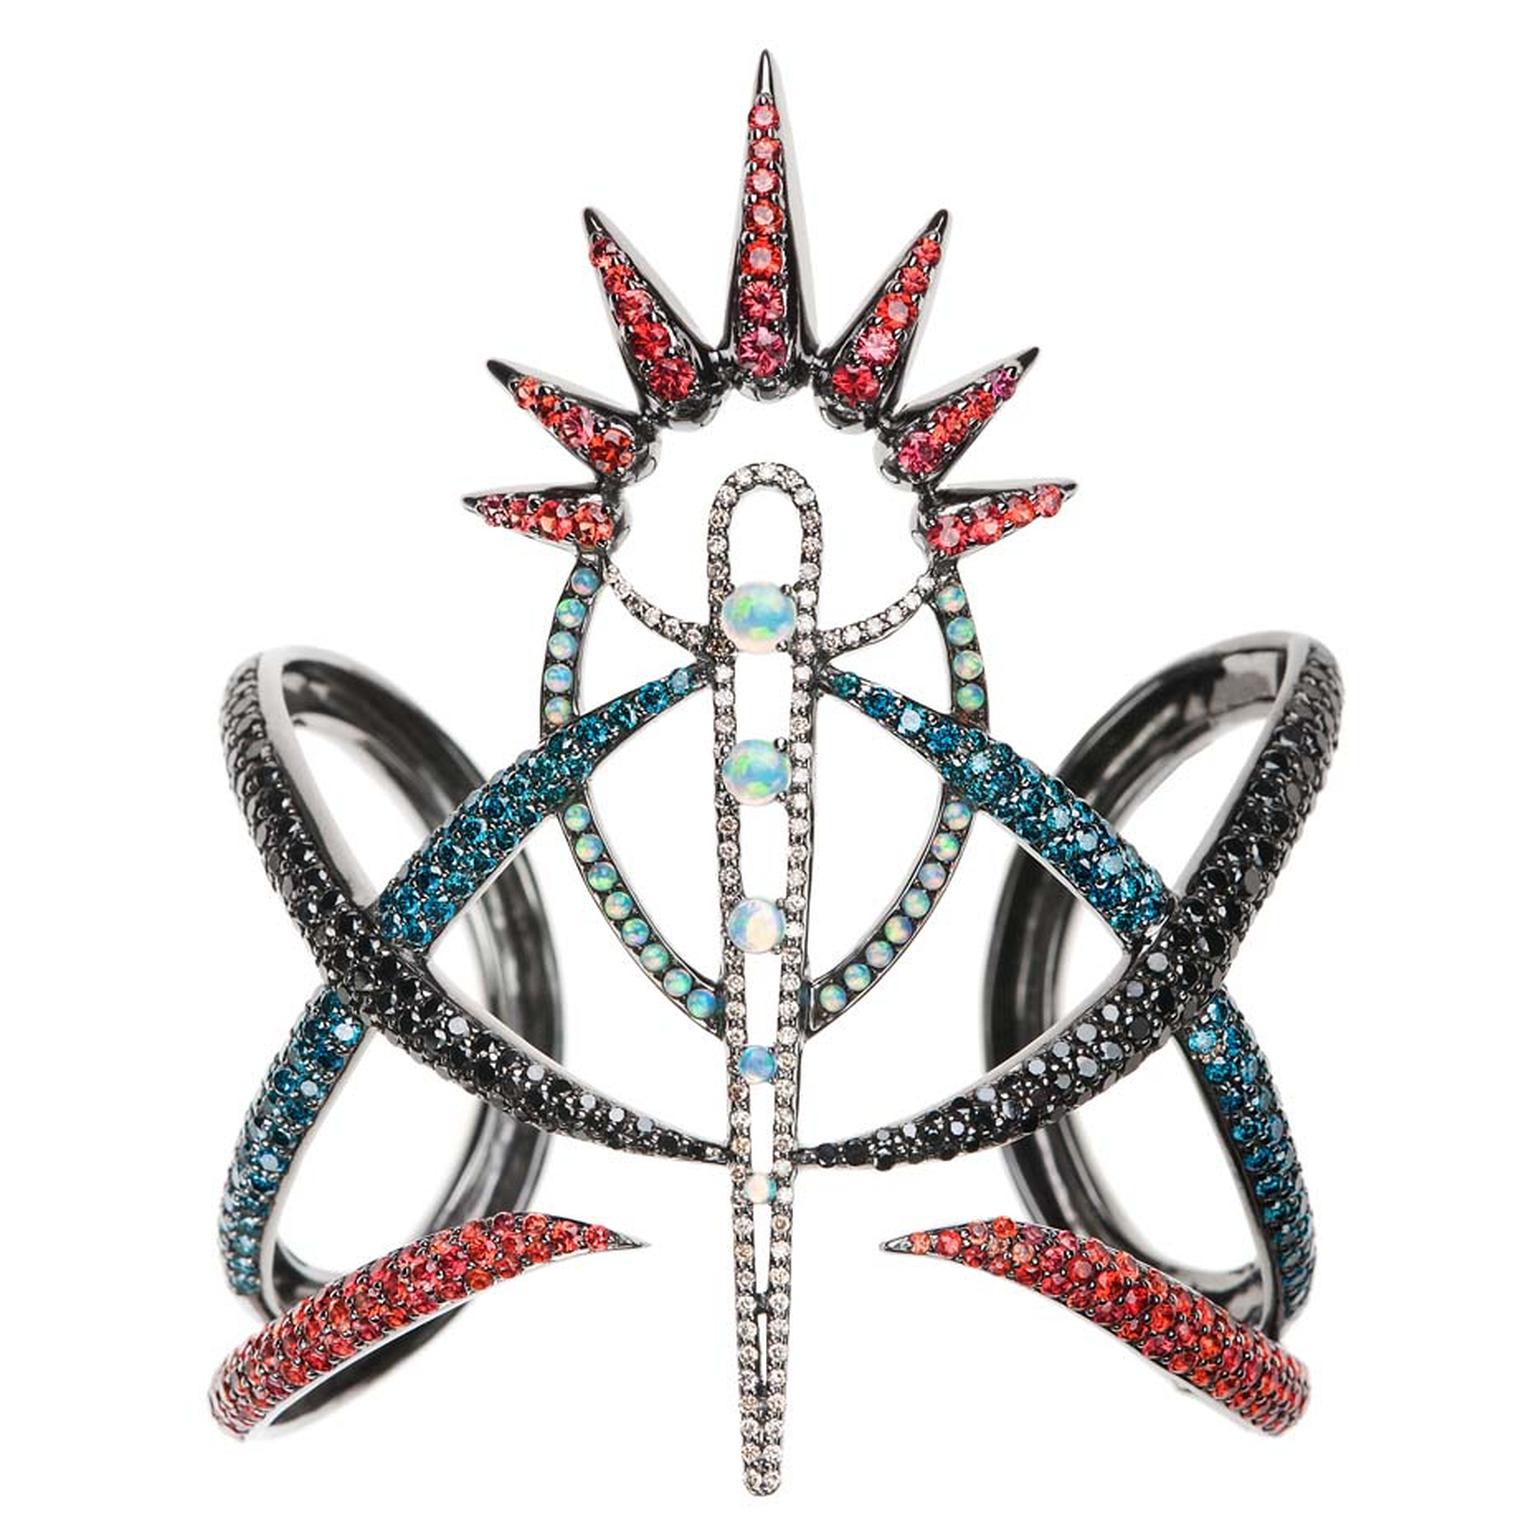 New to the Couture Show Las Vegas: Nikos Koulis' Spectrum cuff with brown diamonds, black diamonds, blue diamonds, orange sapphires and opals